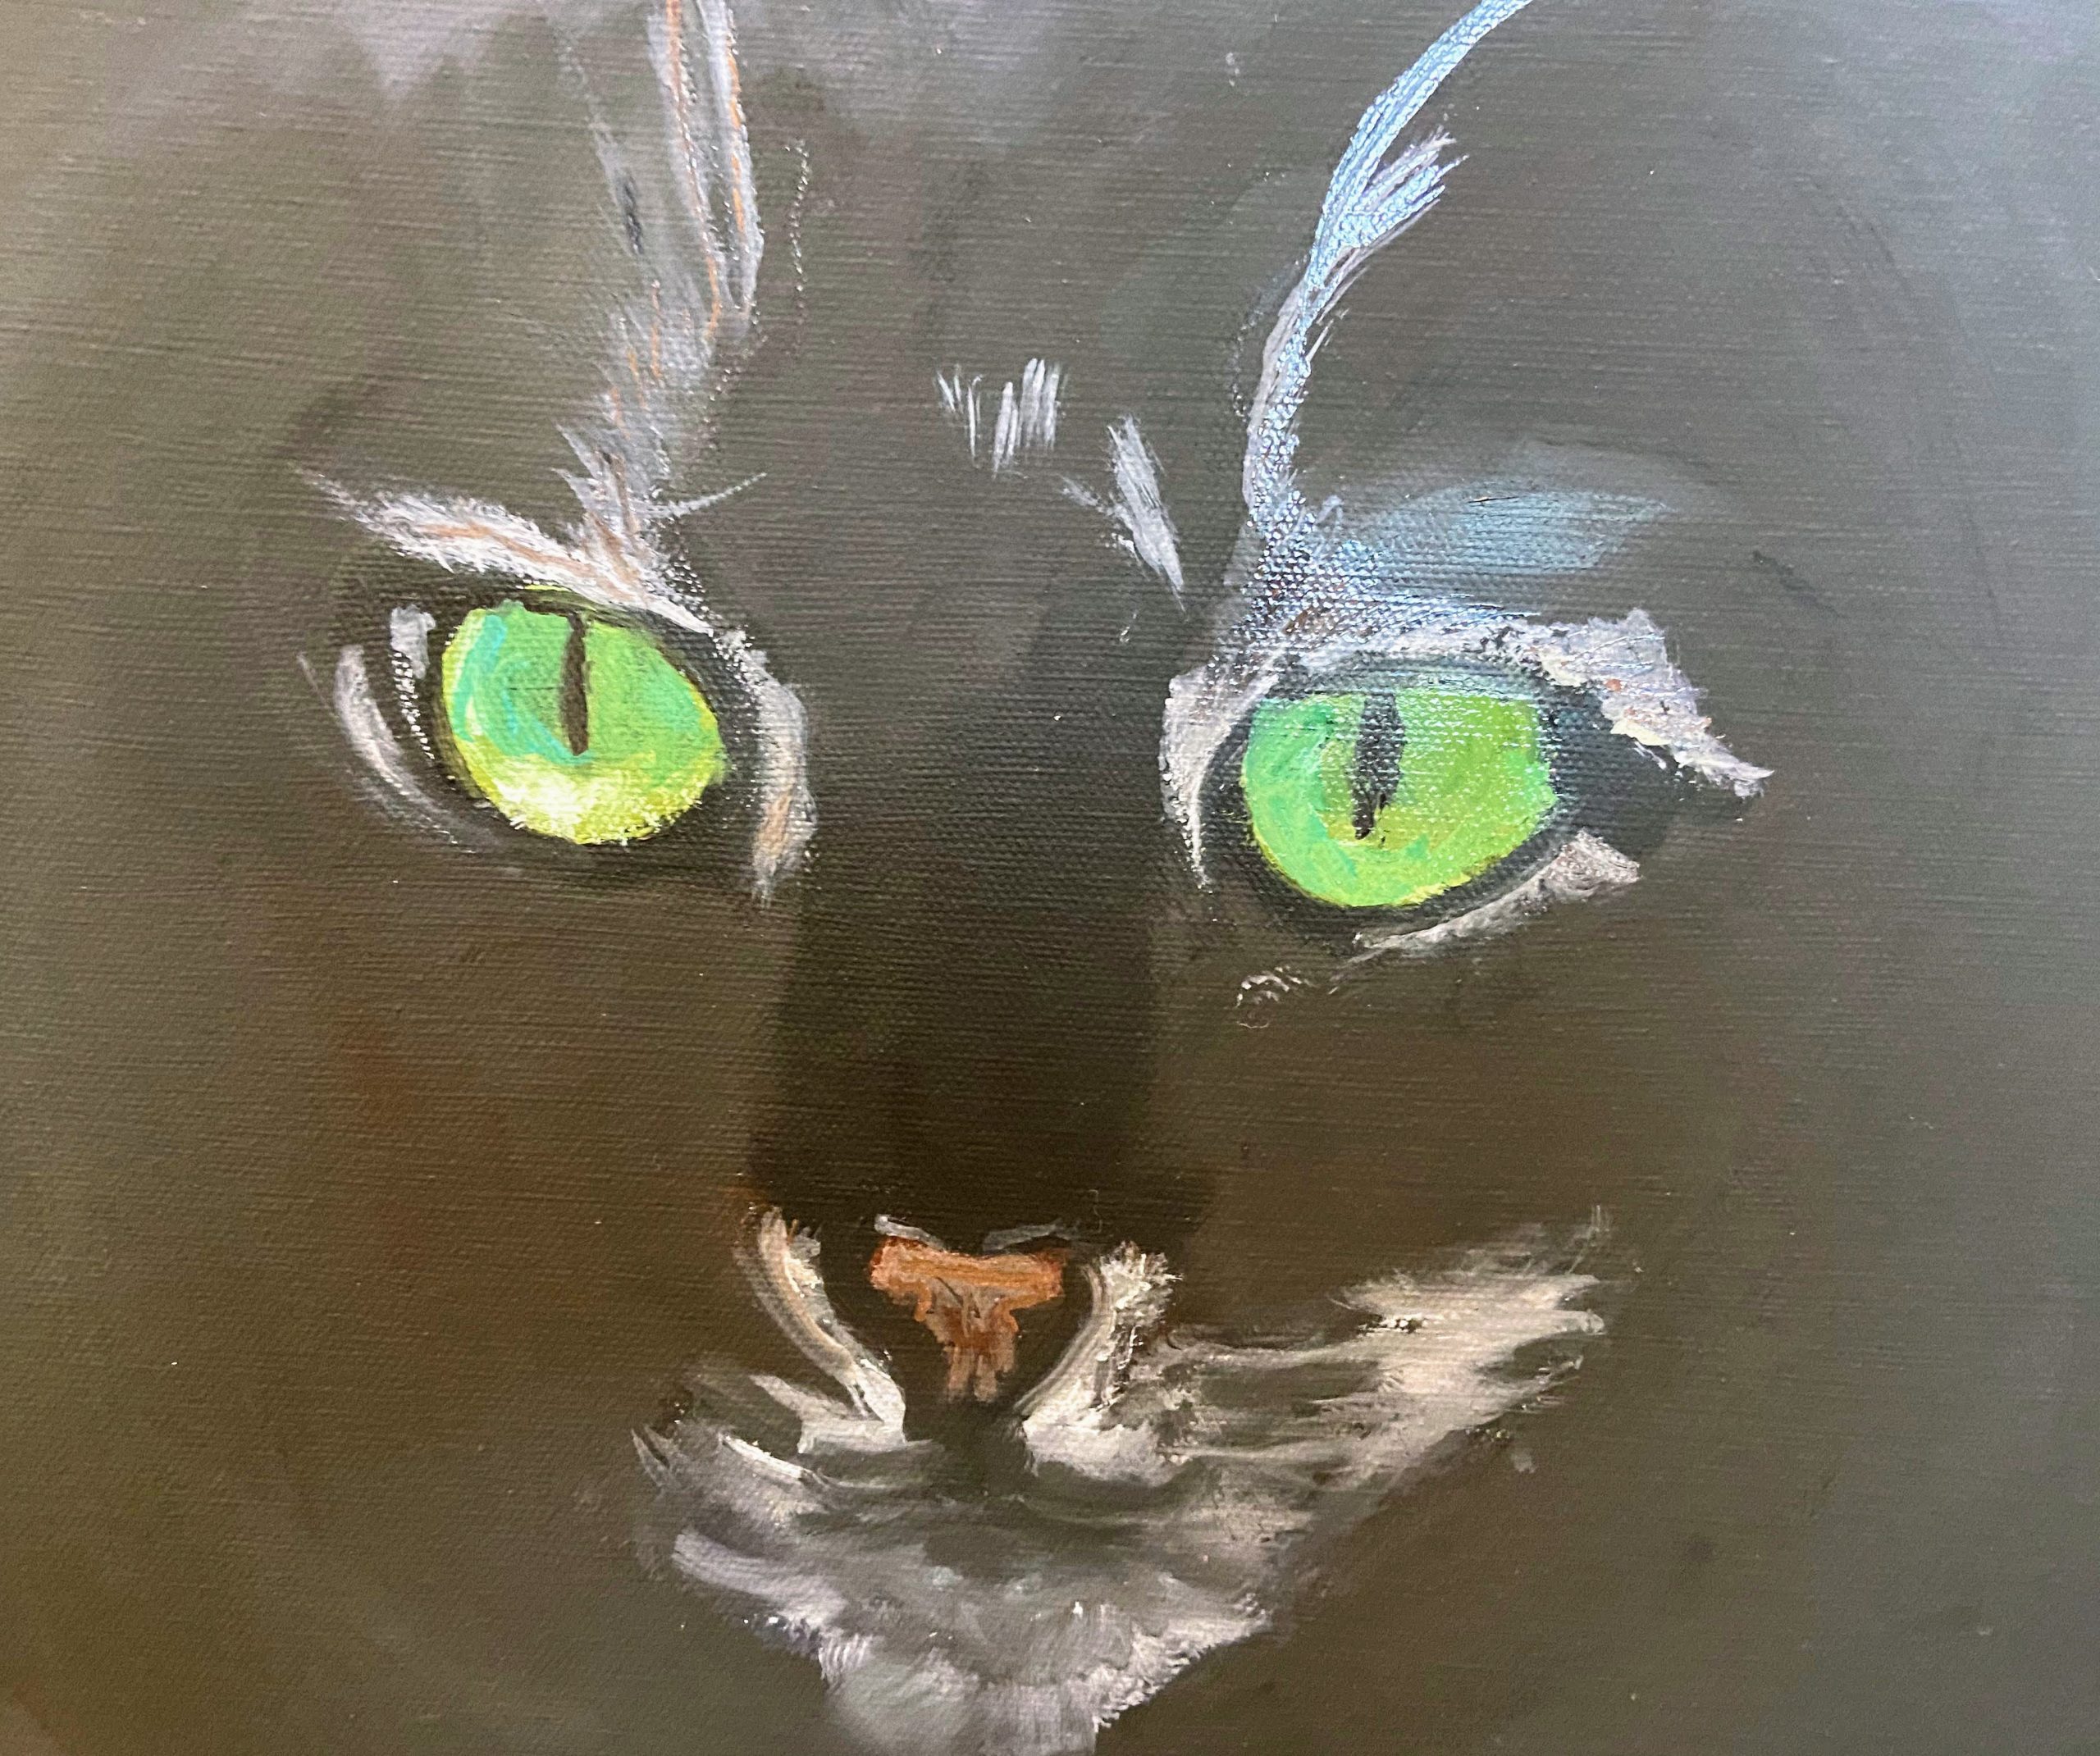 Alla Prima painting of a black cat